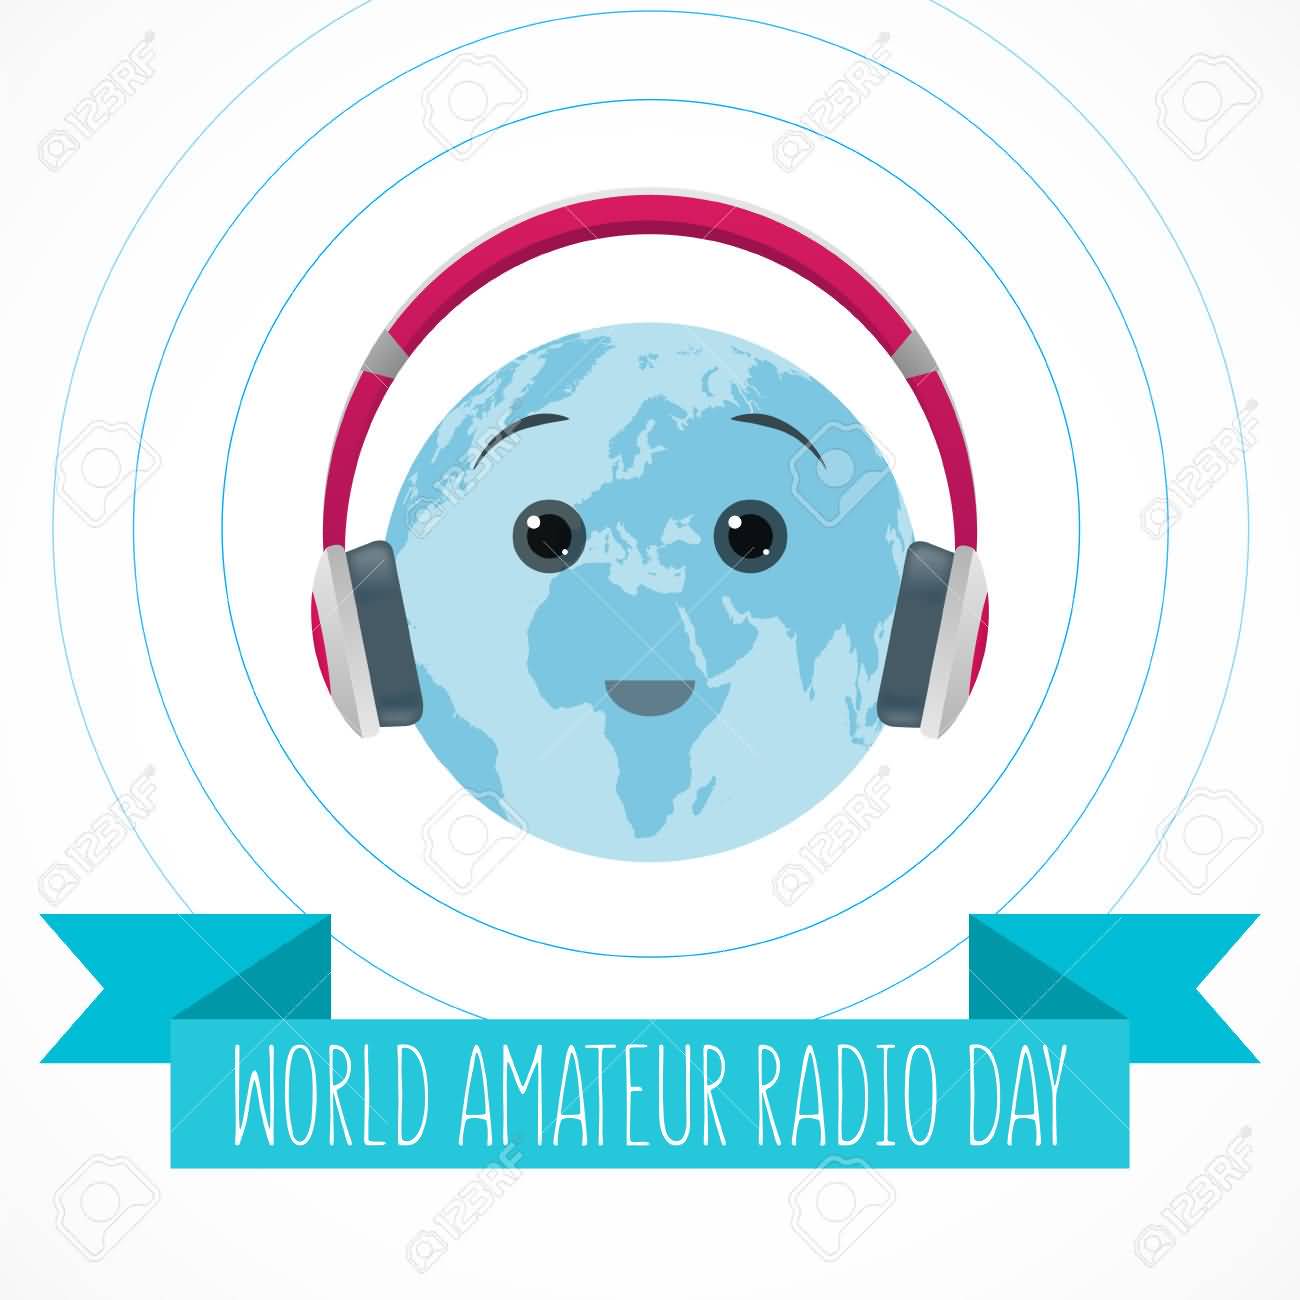 World Amateur Radio Day Cute Globe With Pink Headphones